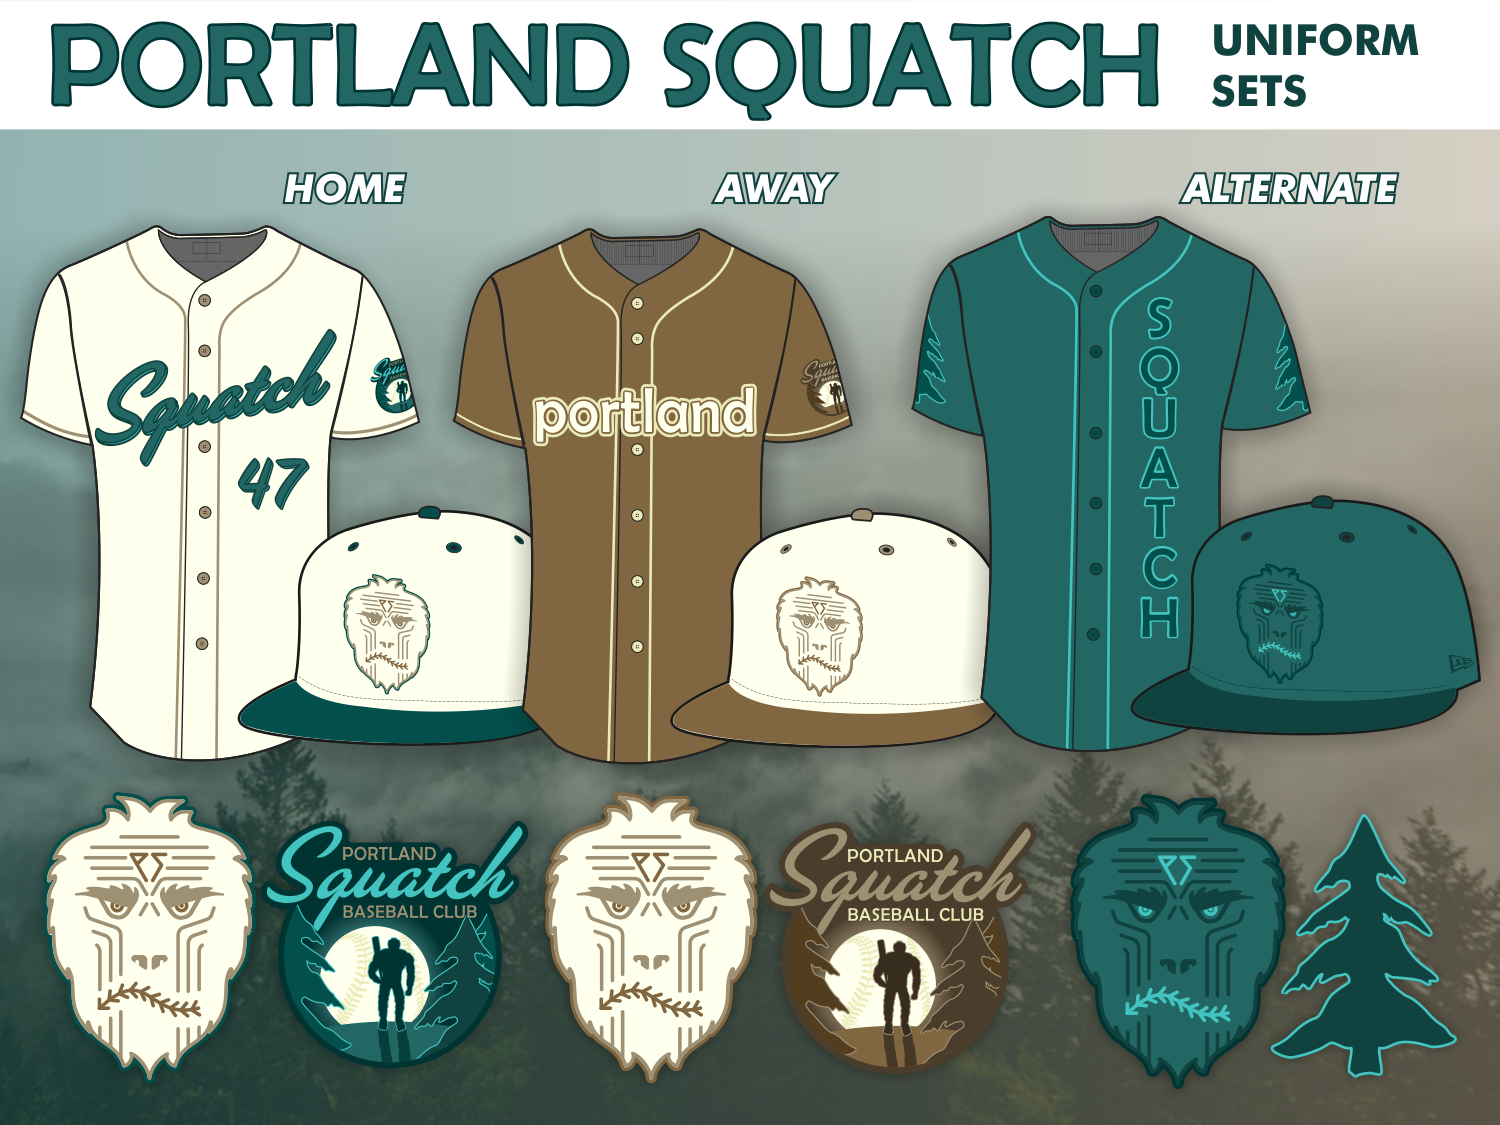 Portland Squatch Baseball Club: Uniform Sets by Luke Hooper on